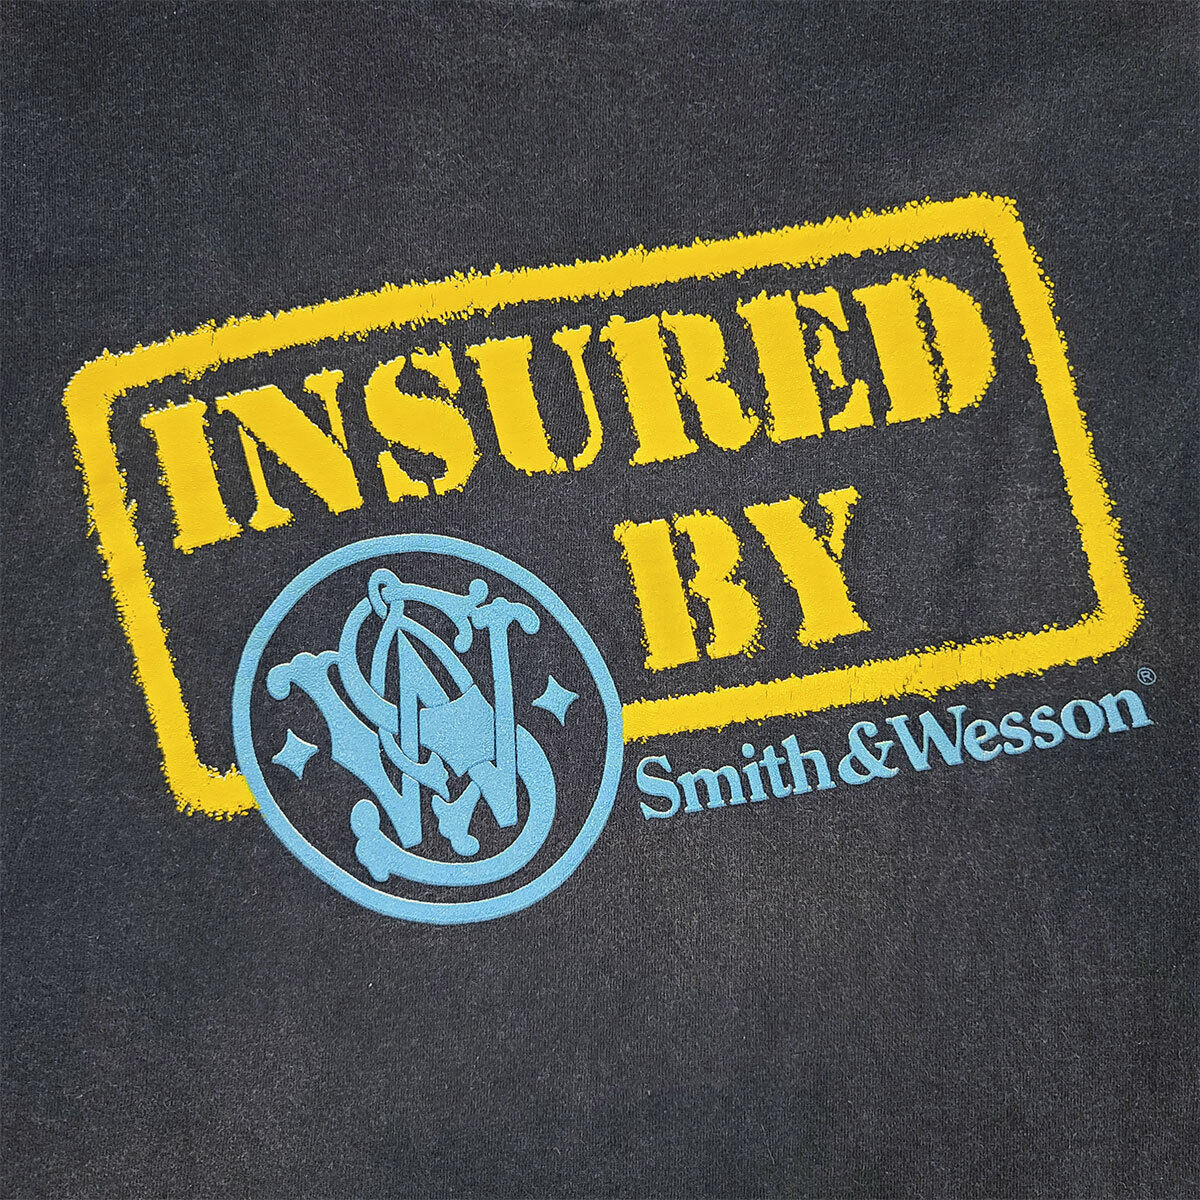 Insured By Smith & Wesson Gun Firearm Black T-Shirt